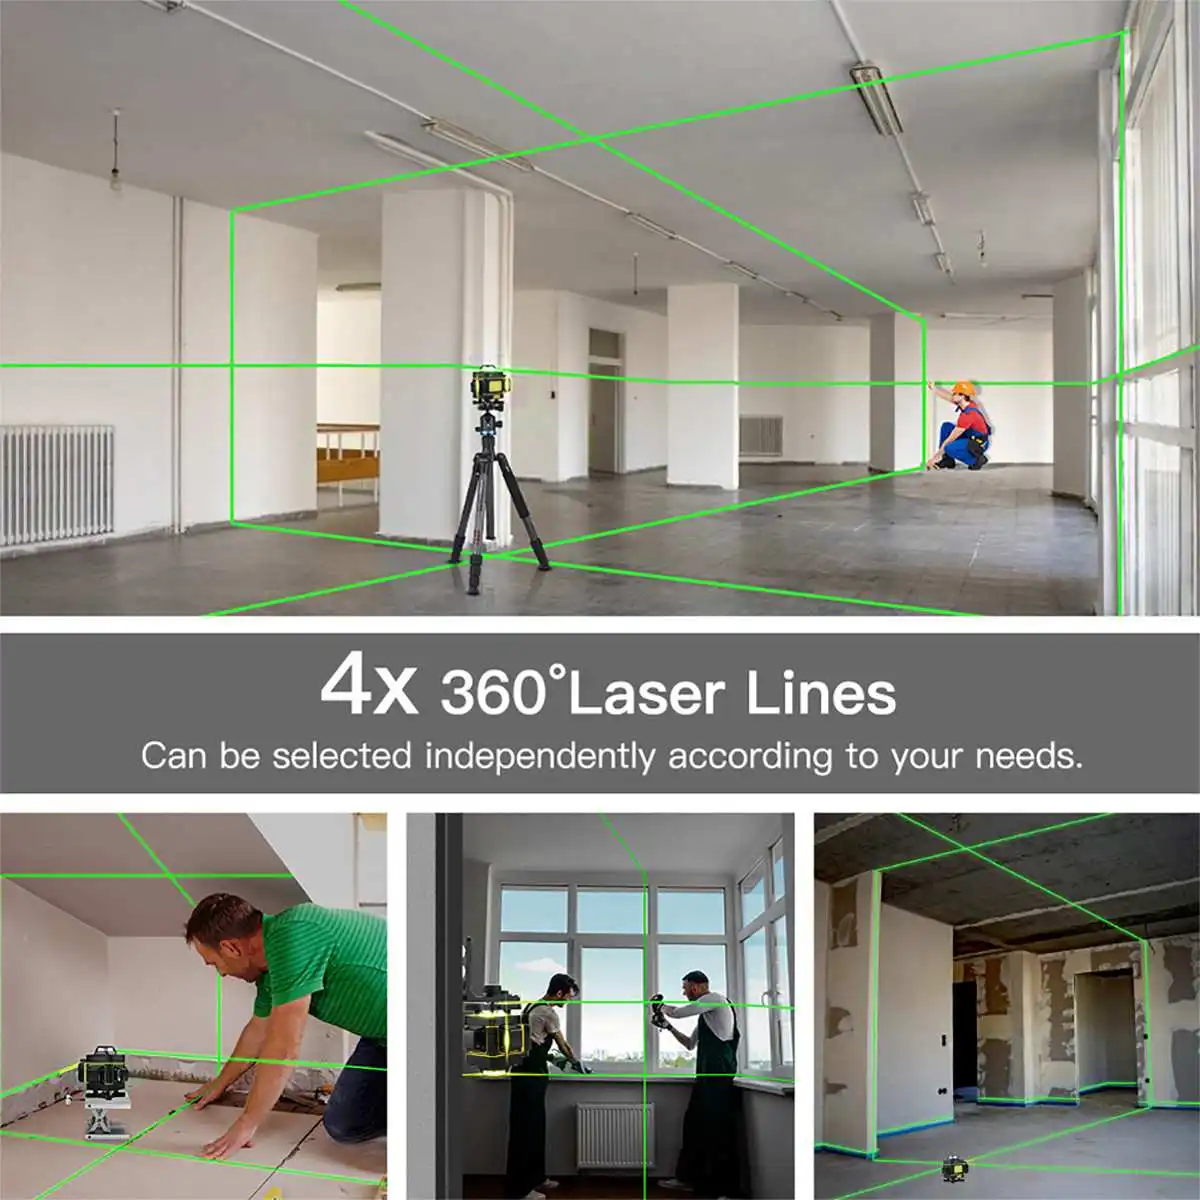 Laser Ravni 16/12 Linije 4D Zeleno Luč LED Zaslon Auto Self Izravnavanje 360° Laserske libele Vodoravno Navpično Križ S Stojalom